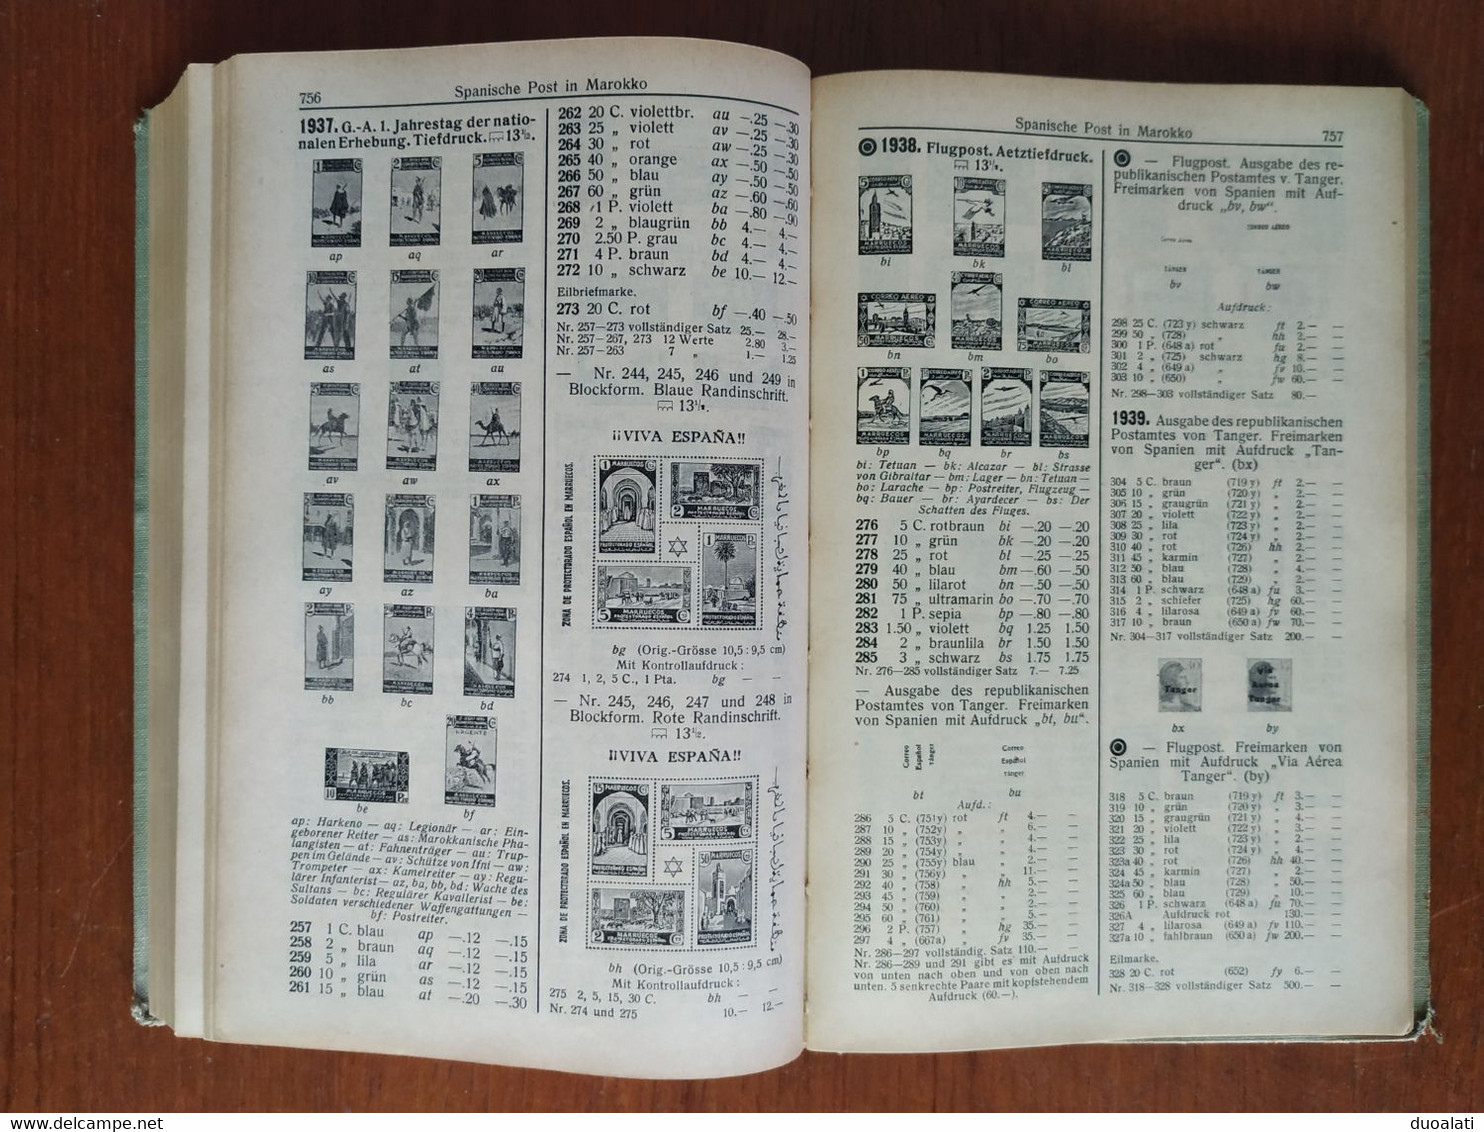 Zumstein 1946 Europa Katalog Catalogue on german language